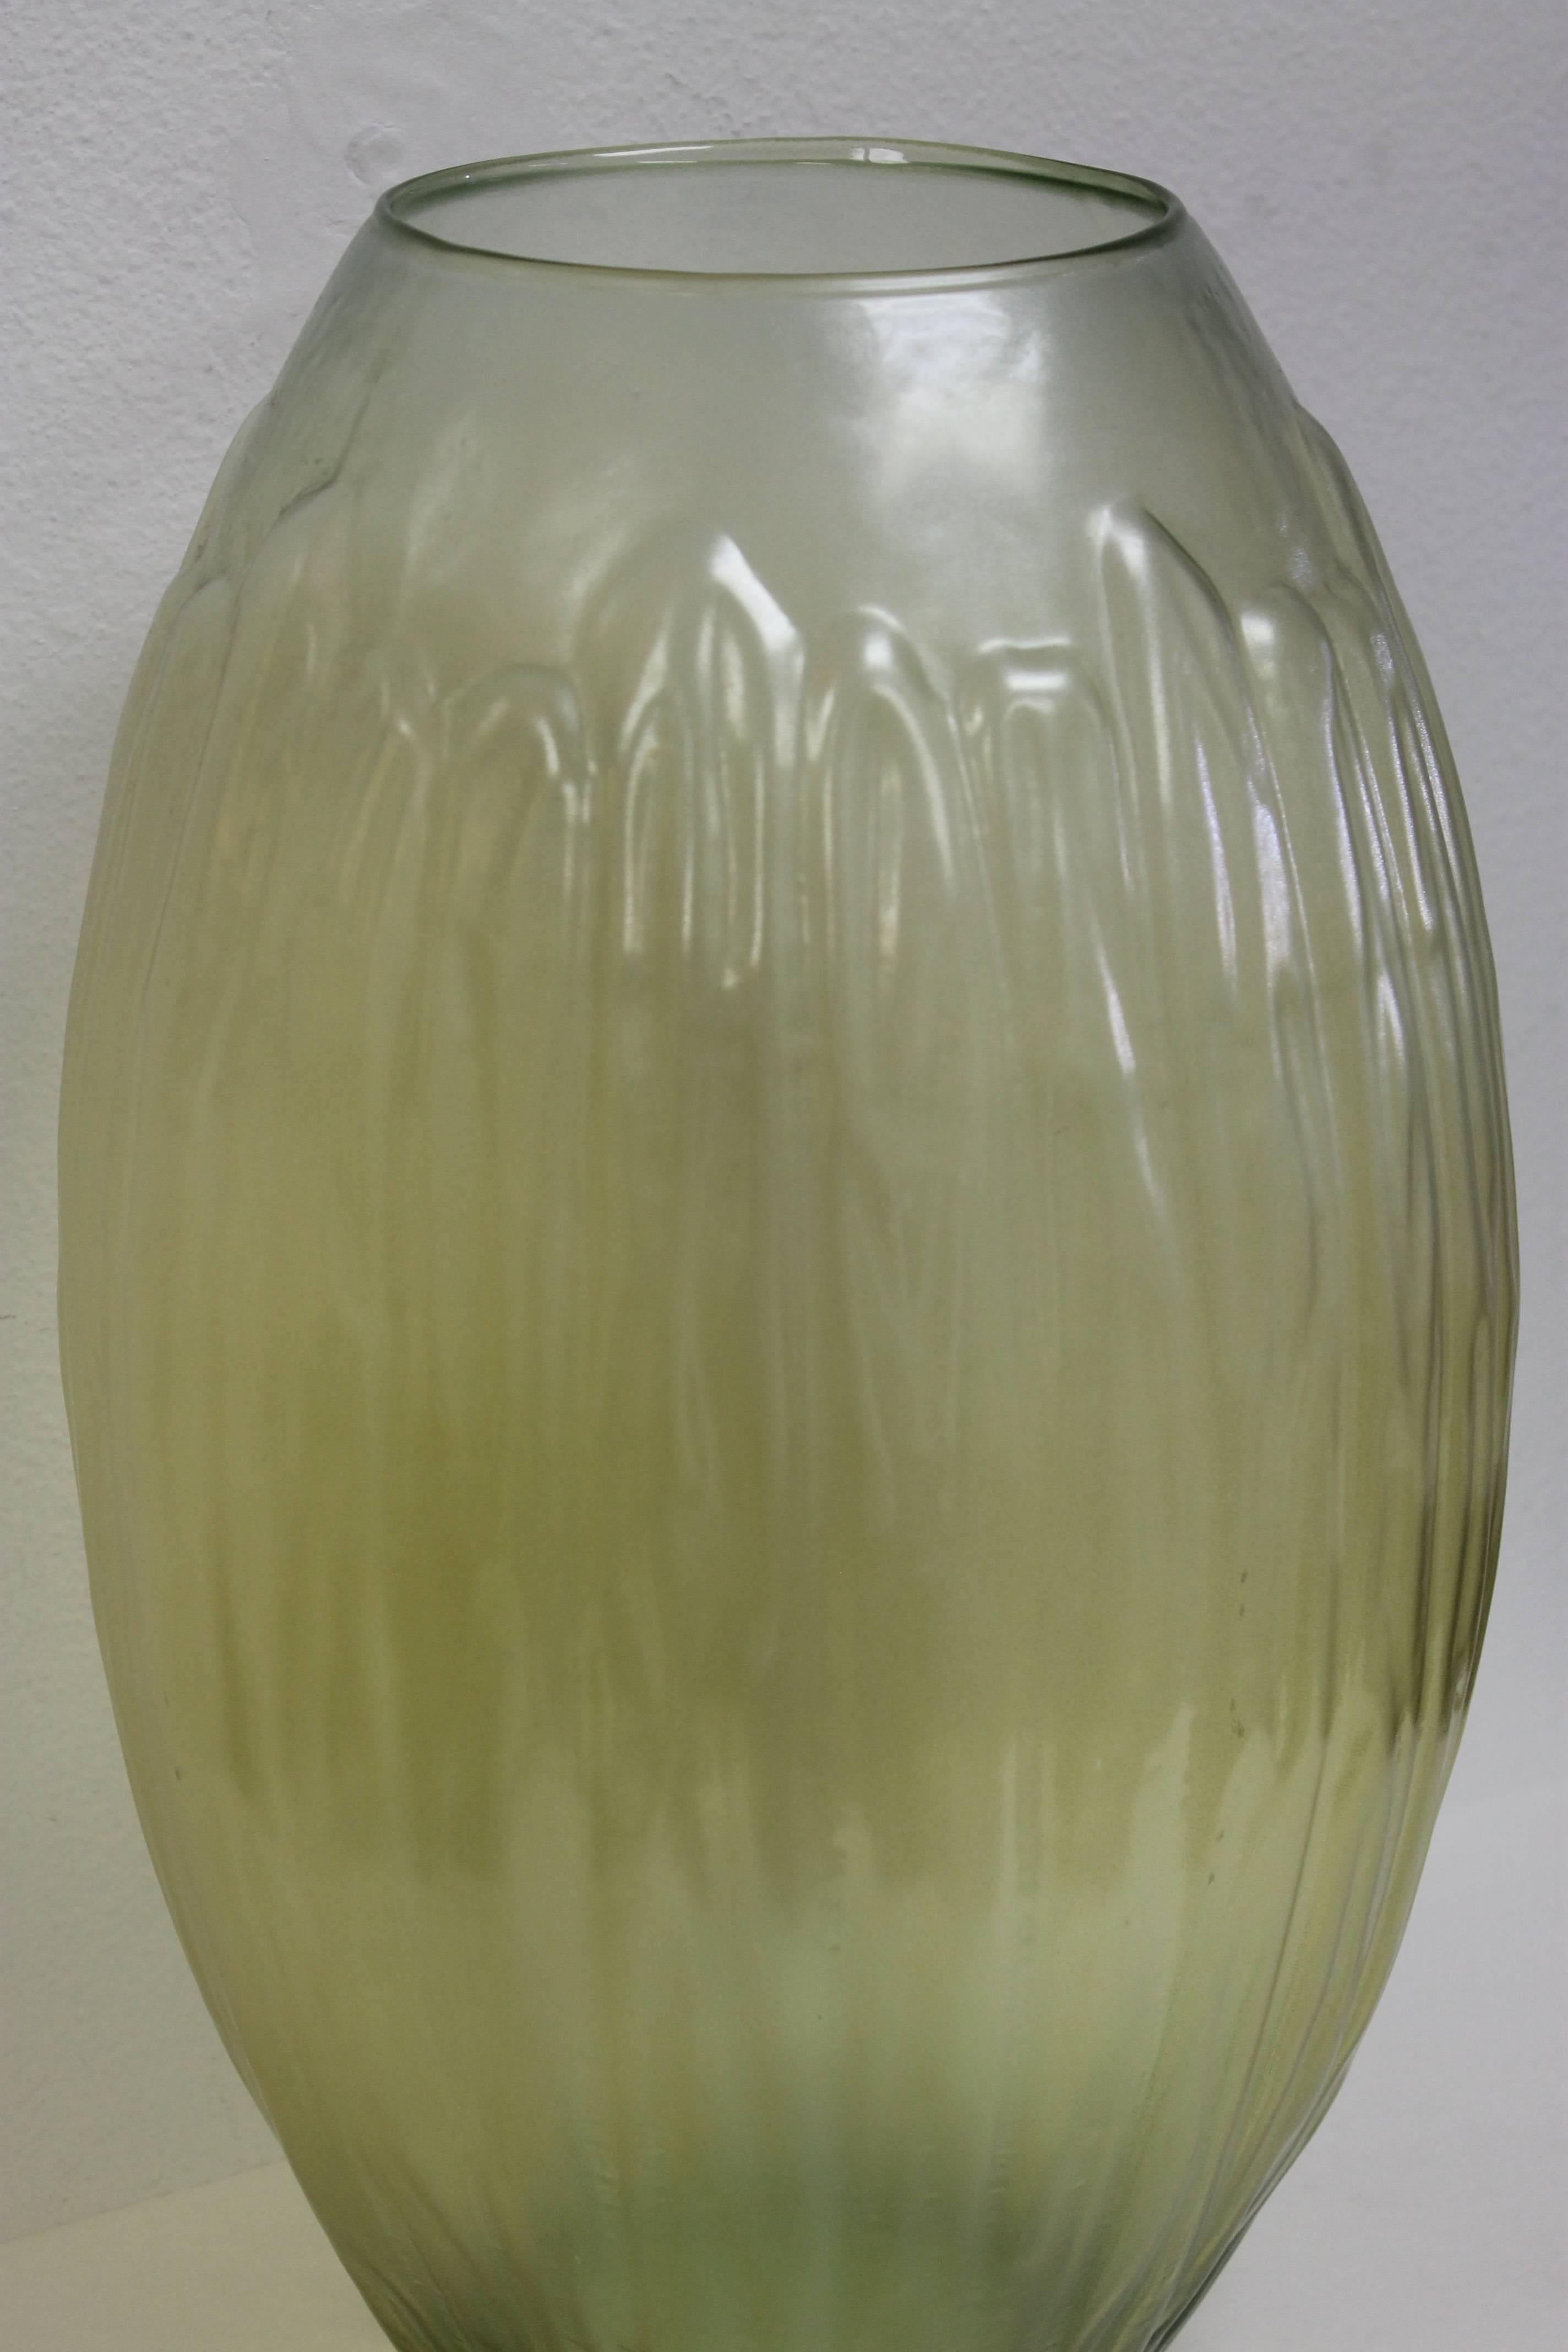 Beautiful pale chartreuse similar to Vaseline glass vase. Vase has raised leaf-like tendrils. Not sure if American or French. Vase measures 19.5